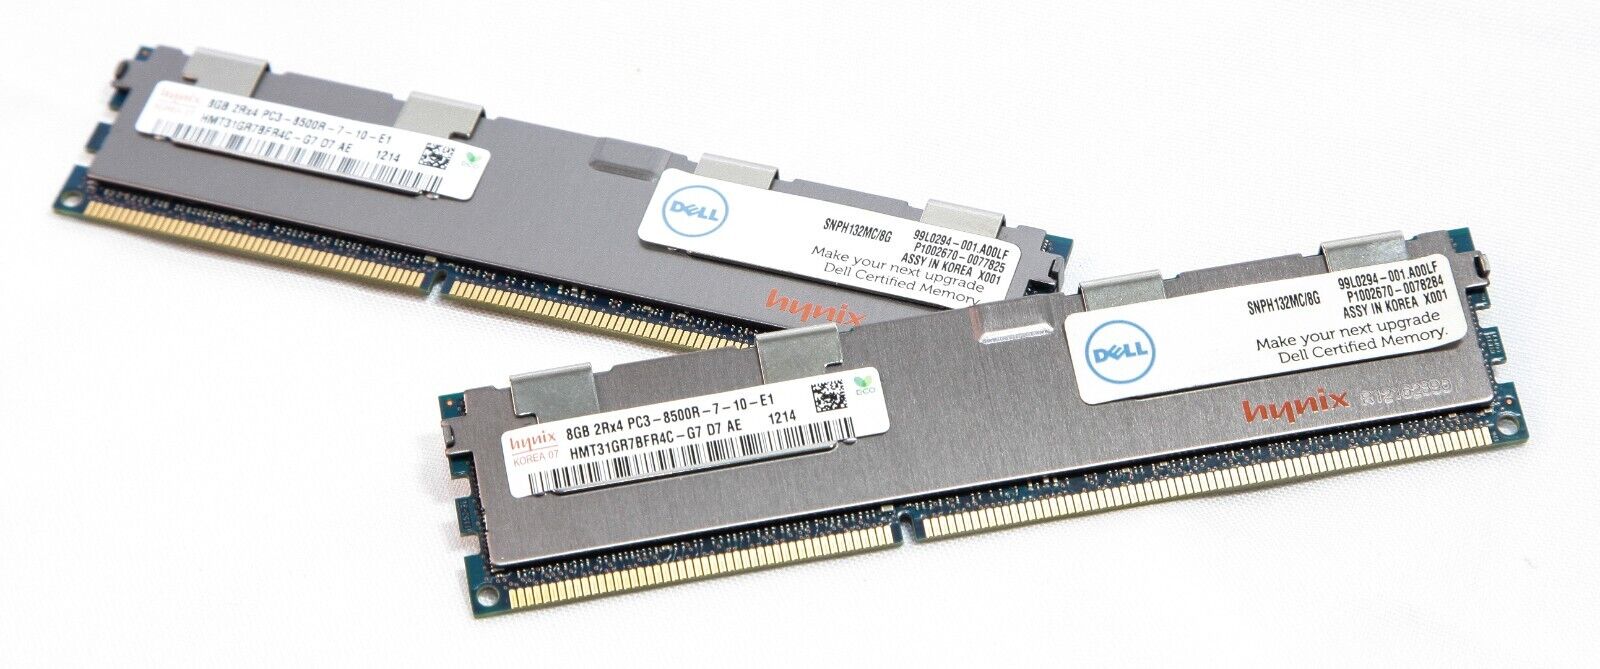 Server RAM 12x(8GB) 96GB 2Rx4 PC3 8500R Hynix Orig. Dell with Heatsink Set